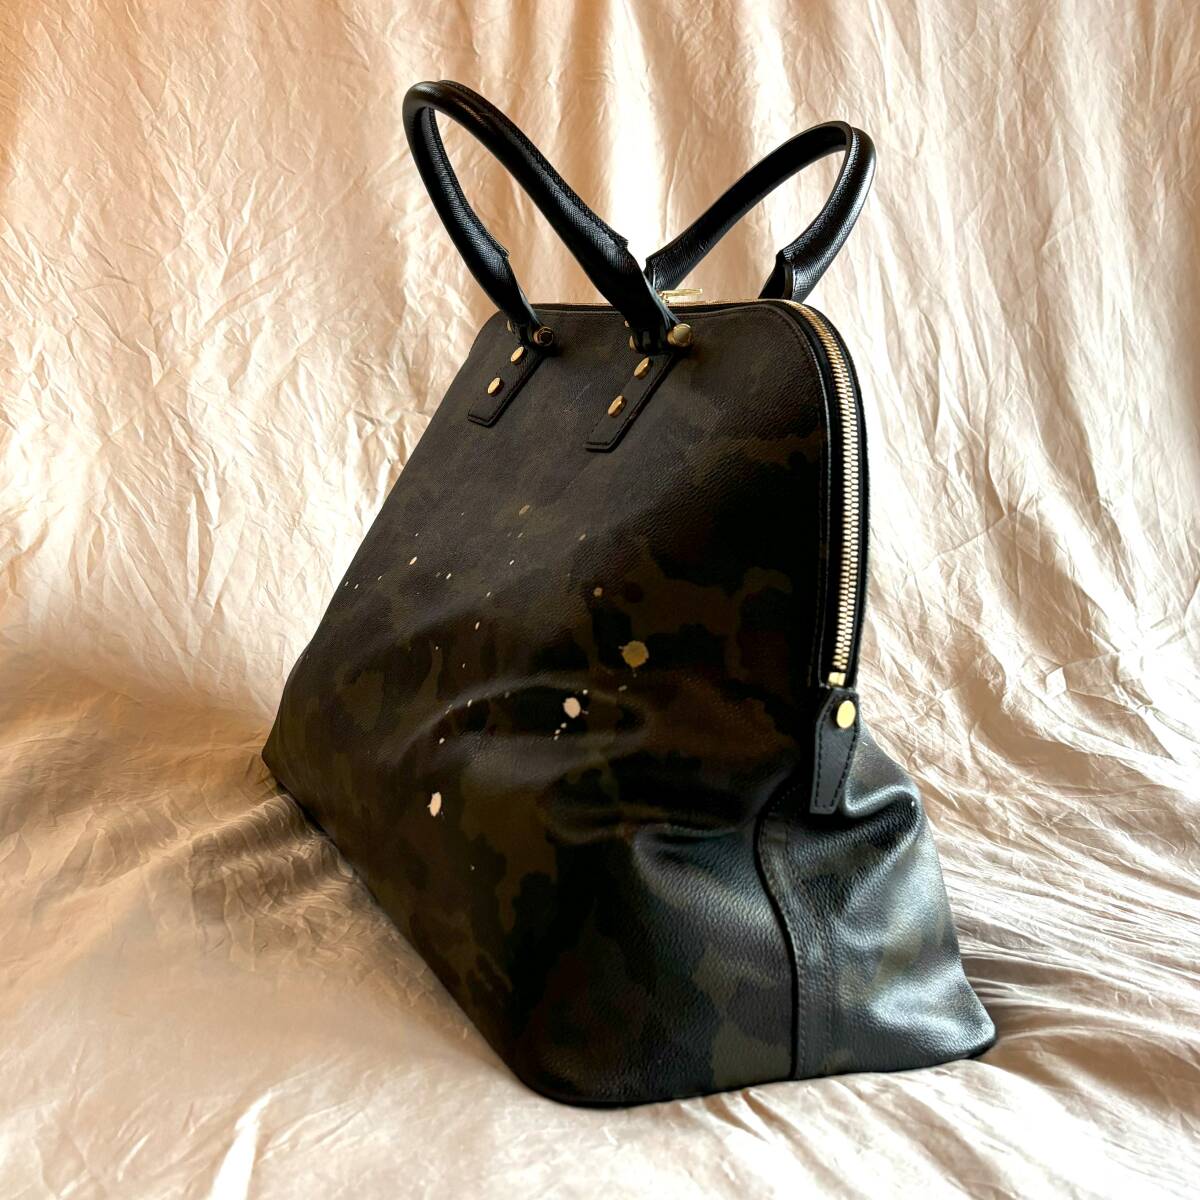 [GENTIL BANDIT| Jean ti van ti] розничная цена 47,300 иен GB1983-MM камуфляж PVC кожа ручная сумочка сумка "Boston bag" портфель 